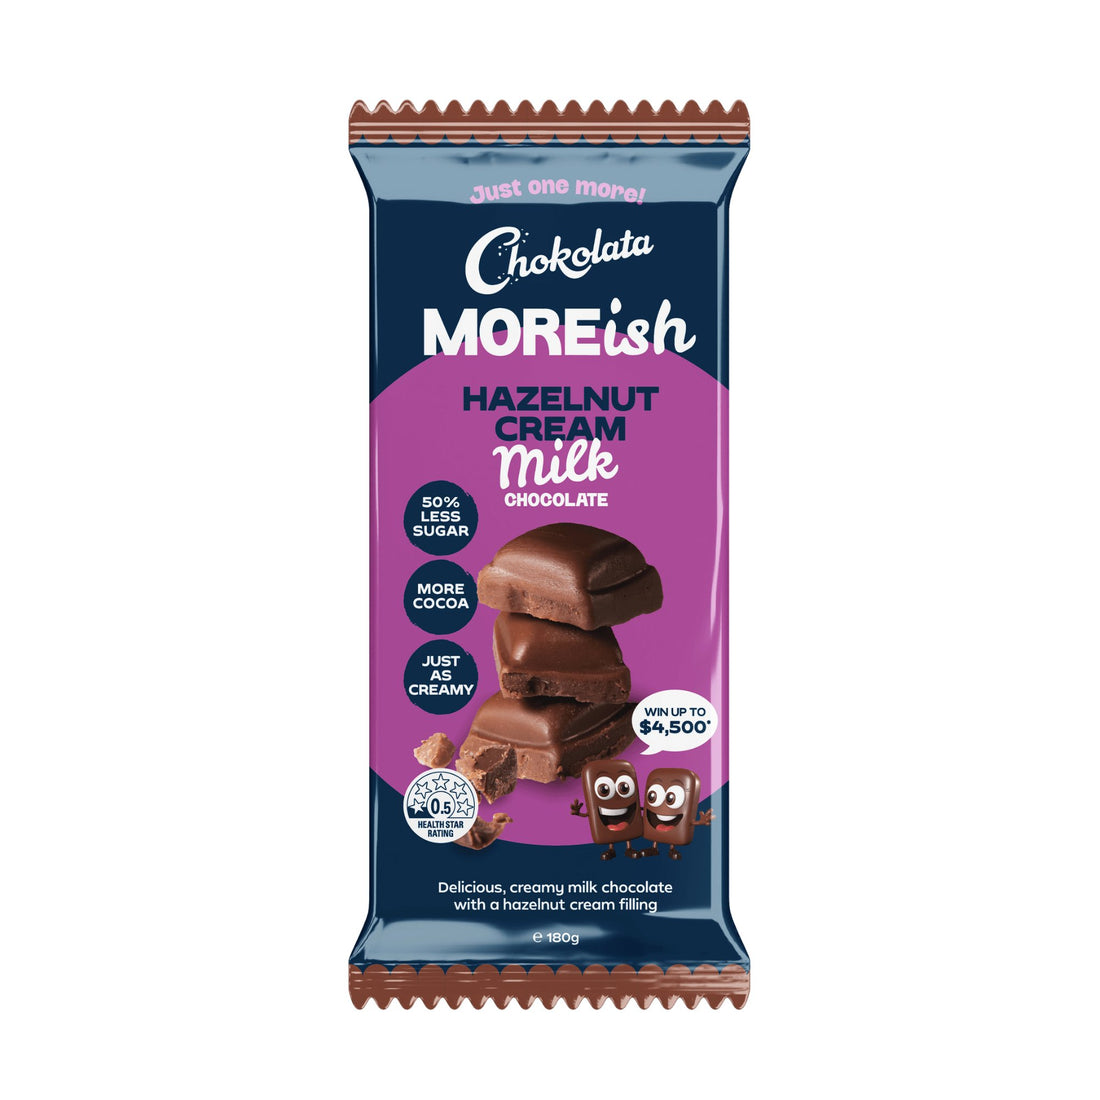 Moreish Hazelnut Cream Milk Chocolate - Chokolata-Moreish-chocolate- australian chocolate, australian chocolate brand, australian made chocolate, chocolates shop, australia chocolates, chocolates